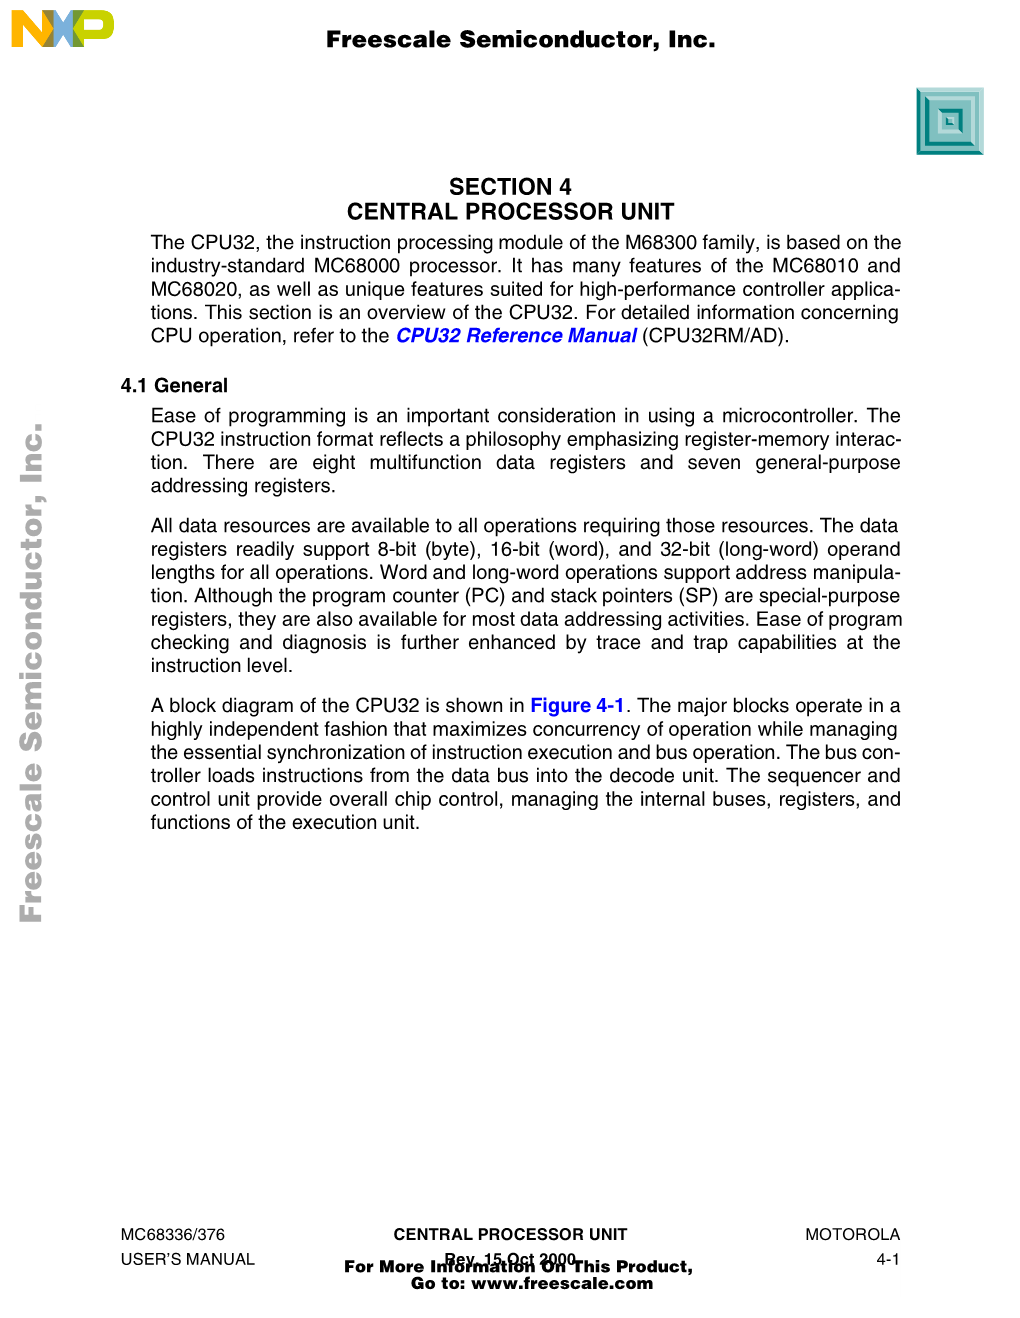 MC68336/376 Section 4: Central Processing Unit